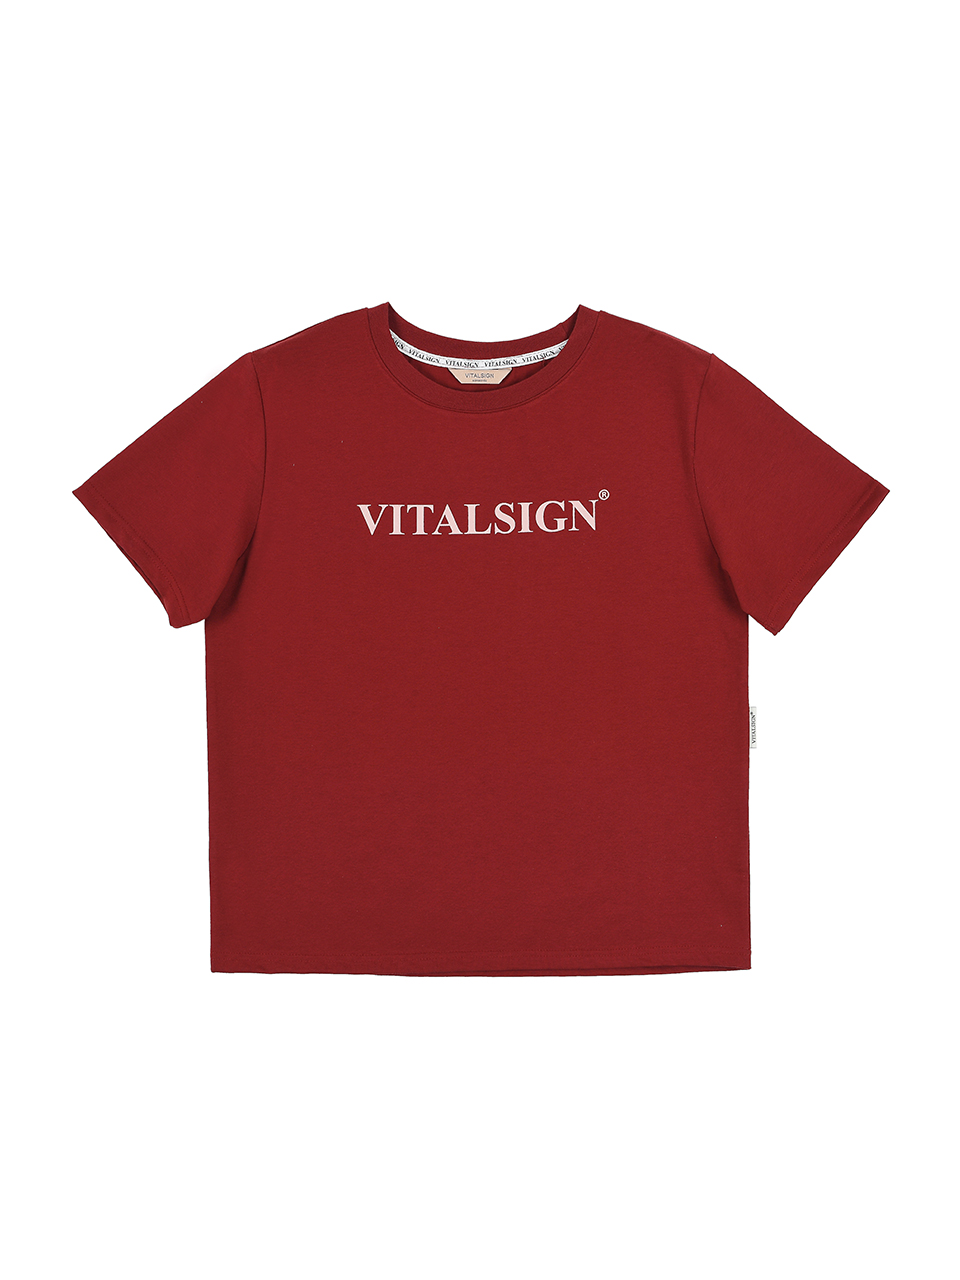 Vitalsign Signature T-shirt (Red)